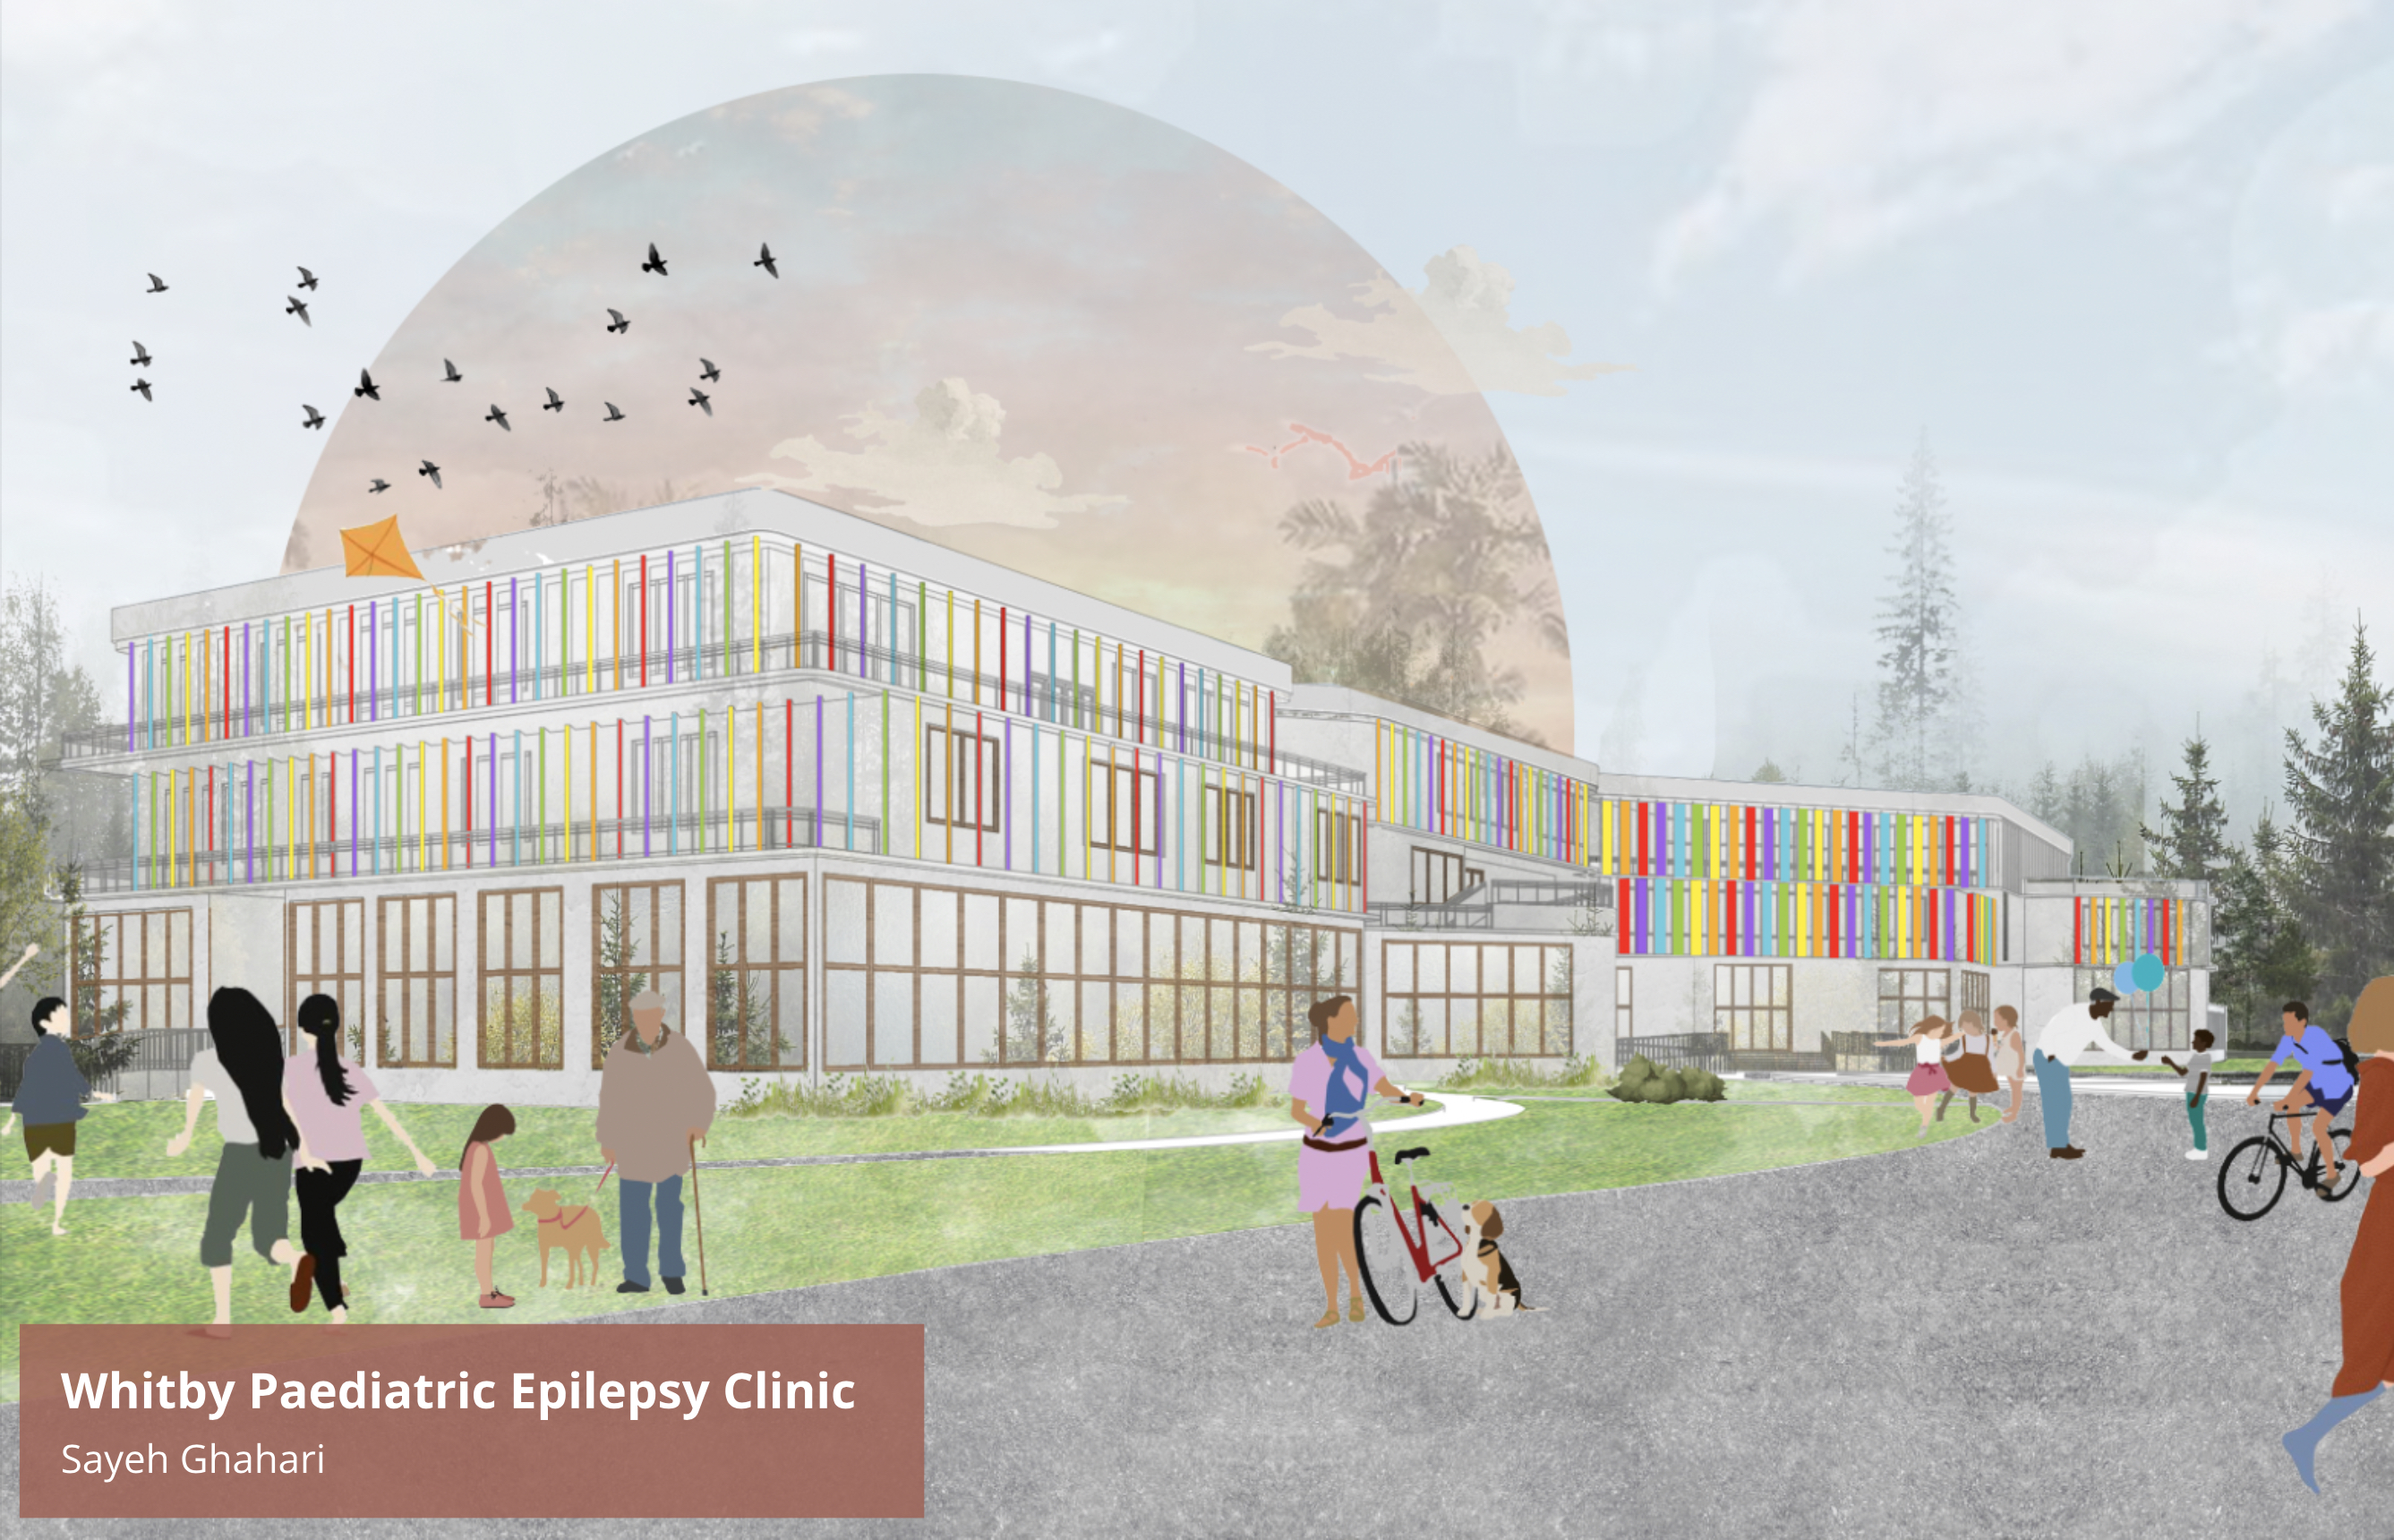 01- Whitby Paediatric Epilepsy Clinic